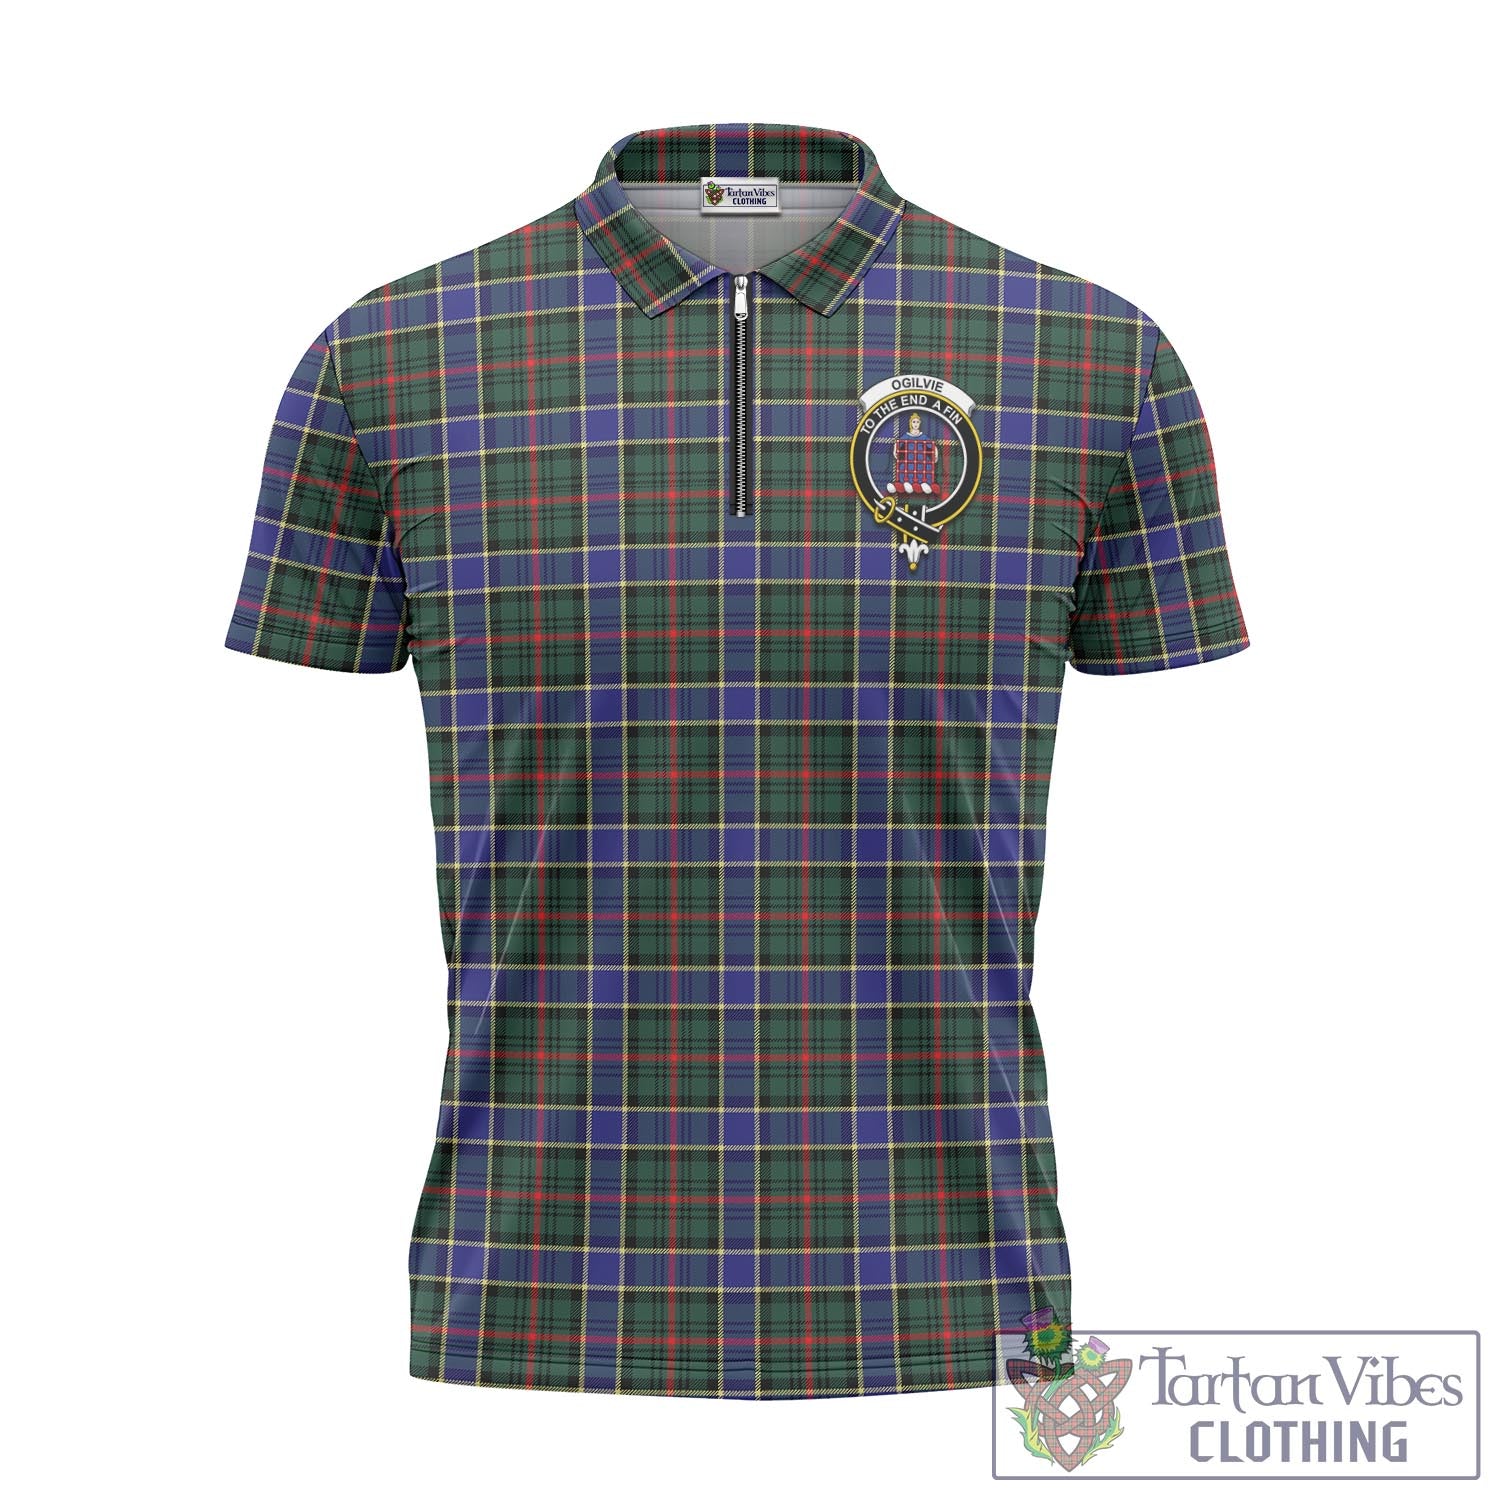 Tartan Vibes Clothing Ogilvie (Ogilvy) Hunting Modern Tartan Zipper Polo Shirt with Family Crest